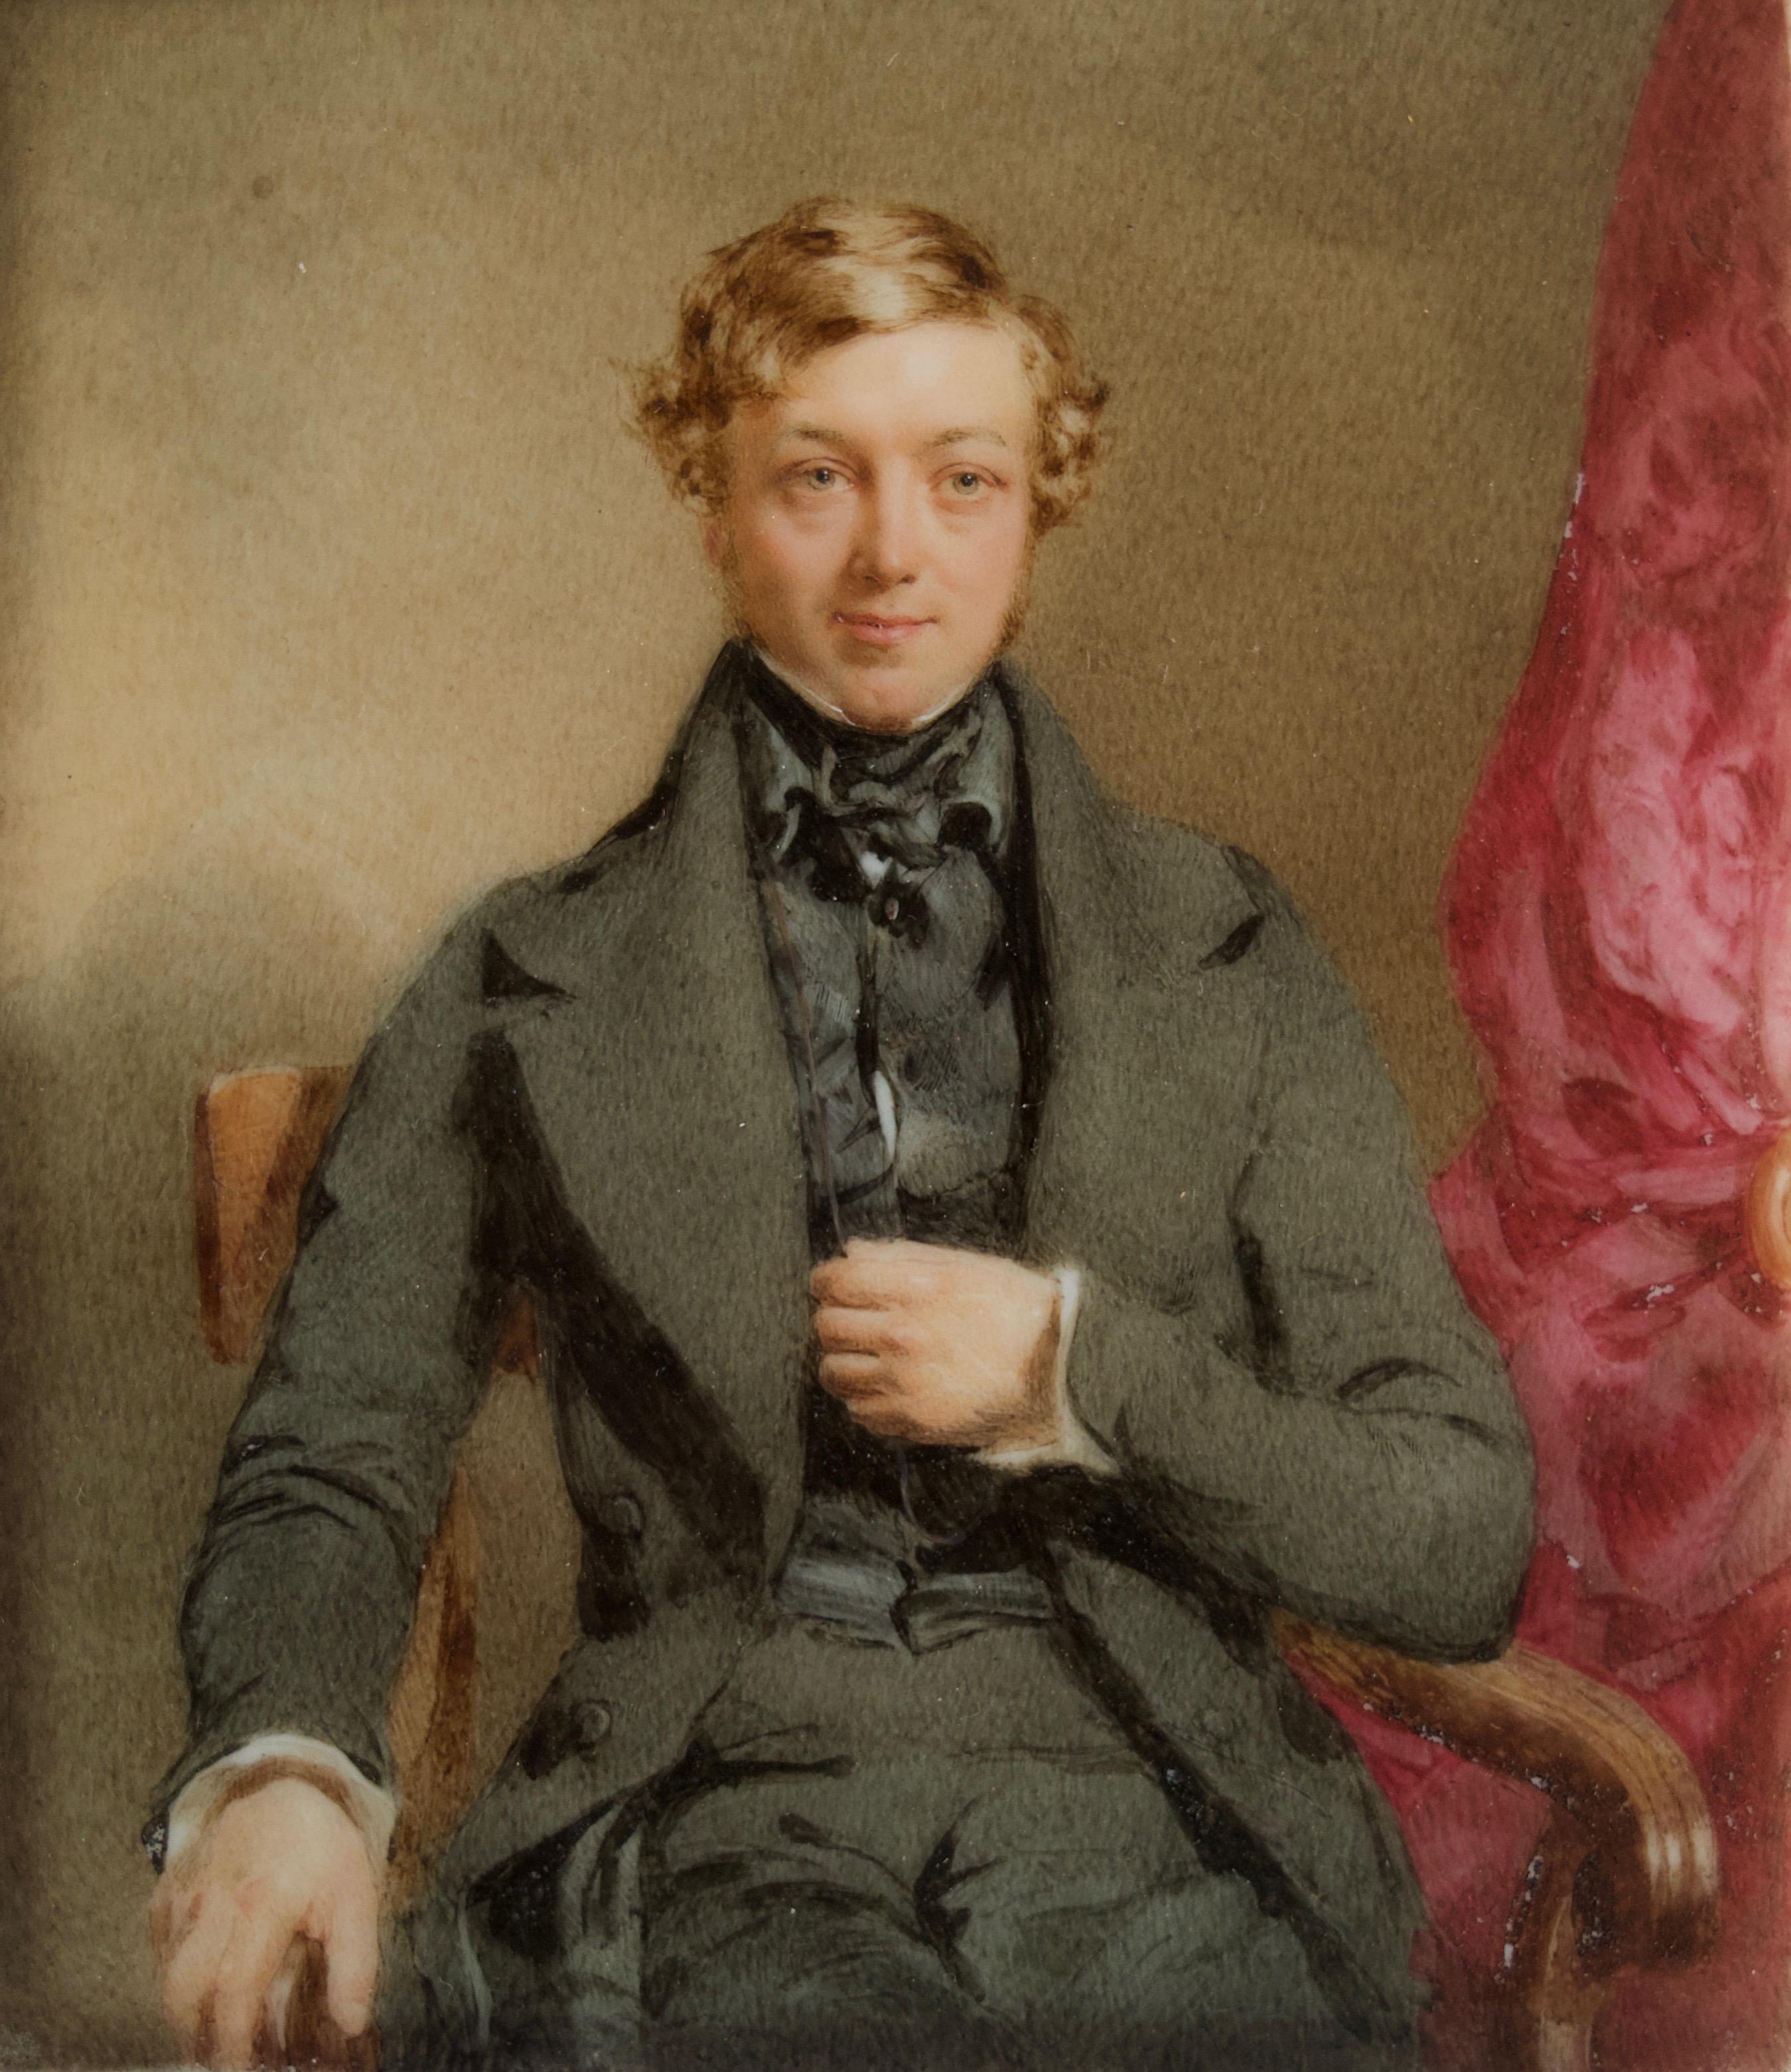 Thomas Heathfield Carrick Portrait Painting - Mid 19th Century English Miniature portrait of a young gentleman